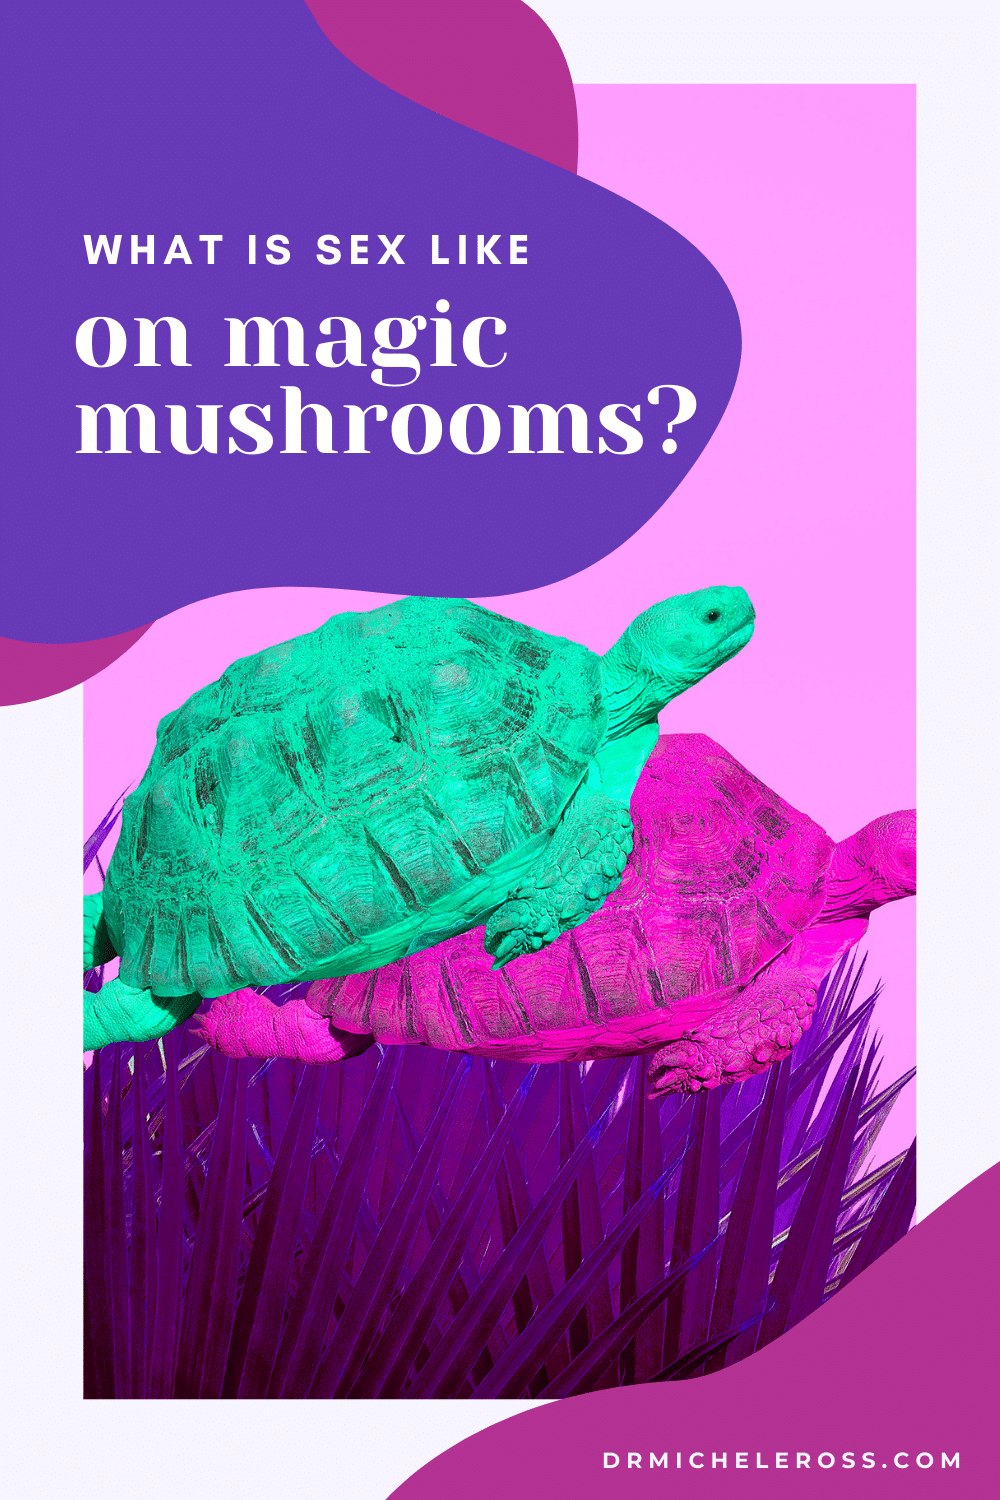 psychedelic turtles having sex on magic mushrooms